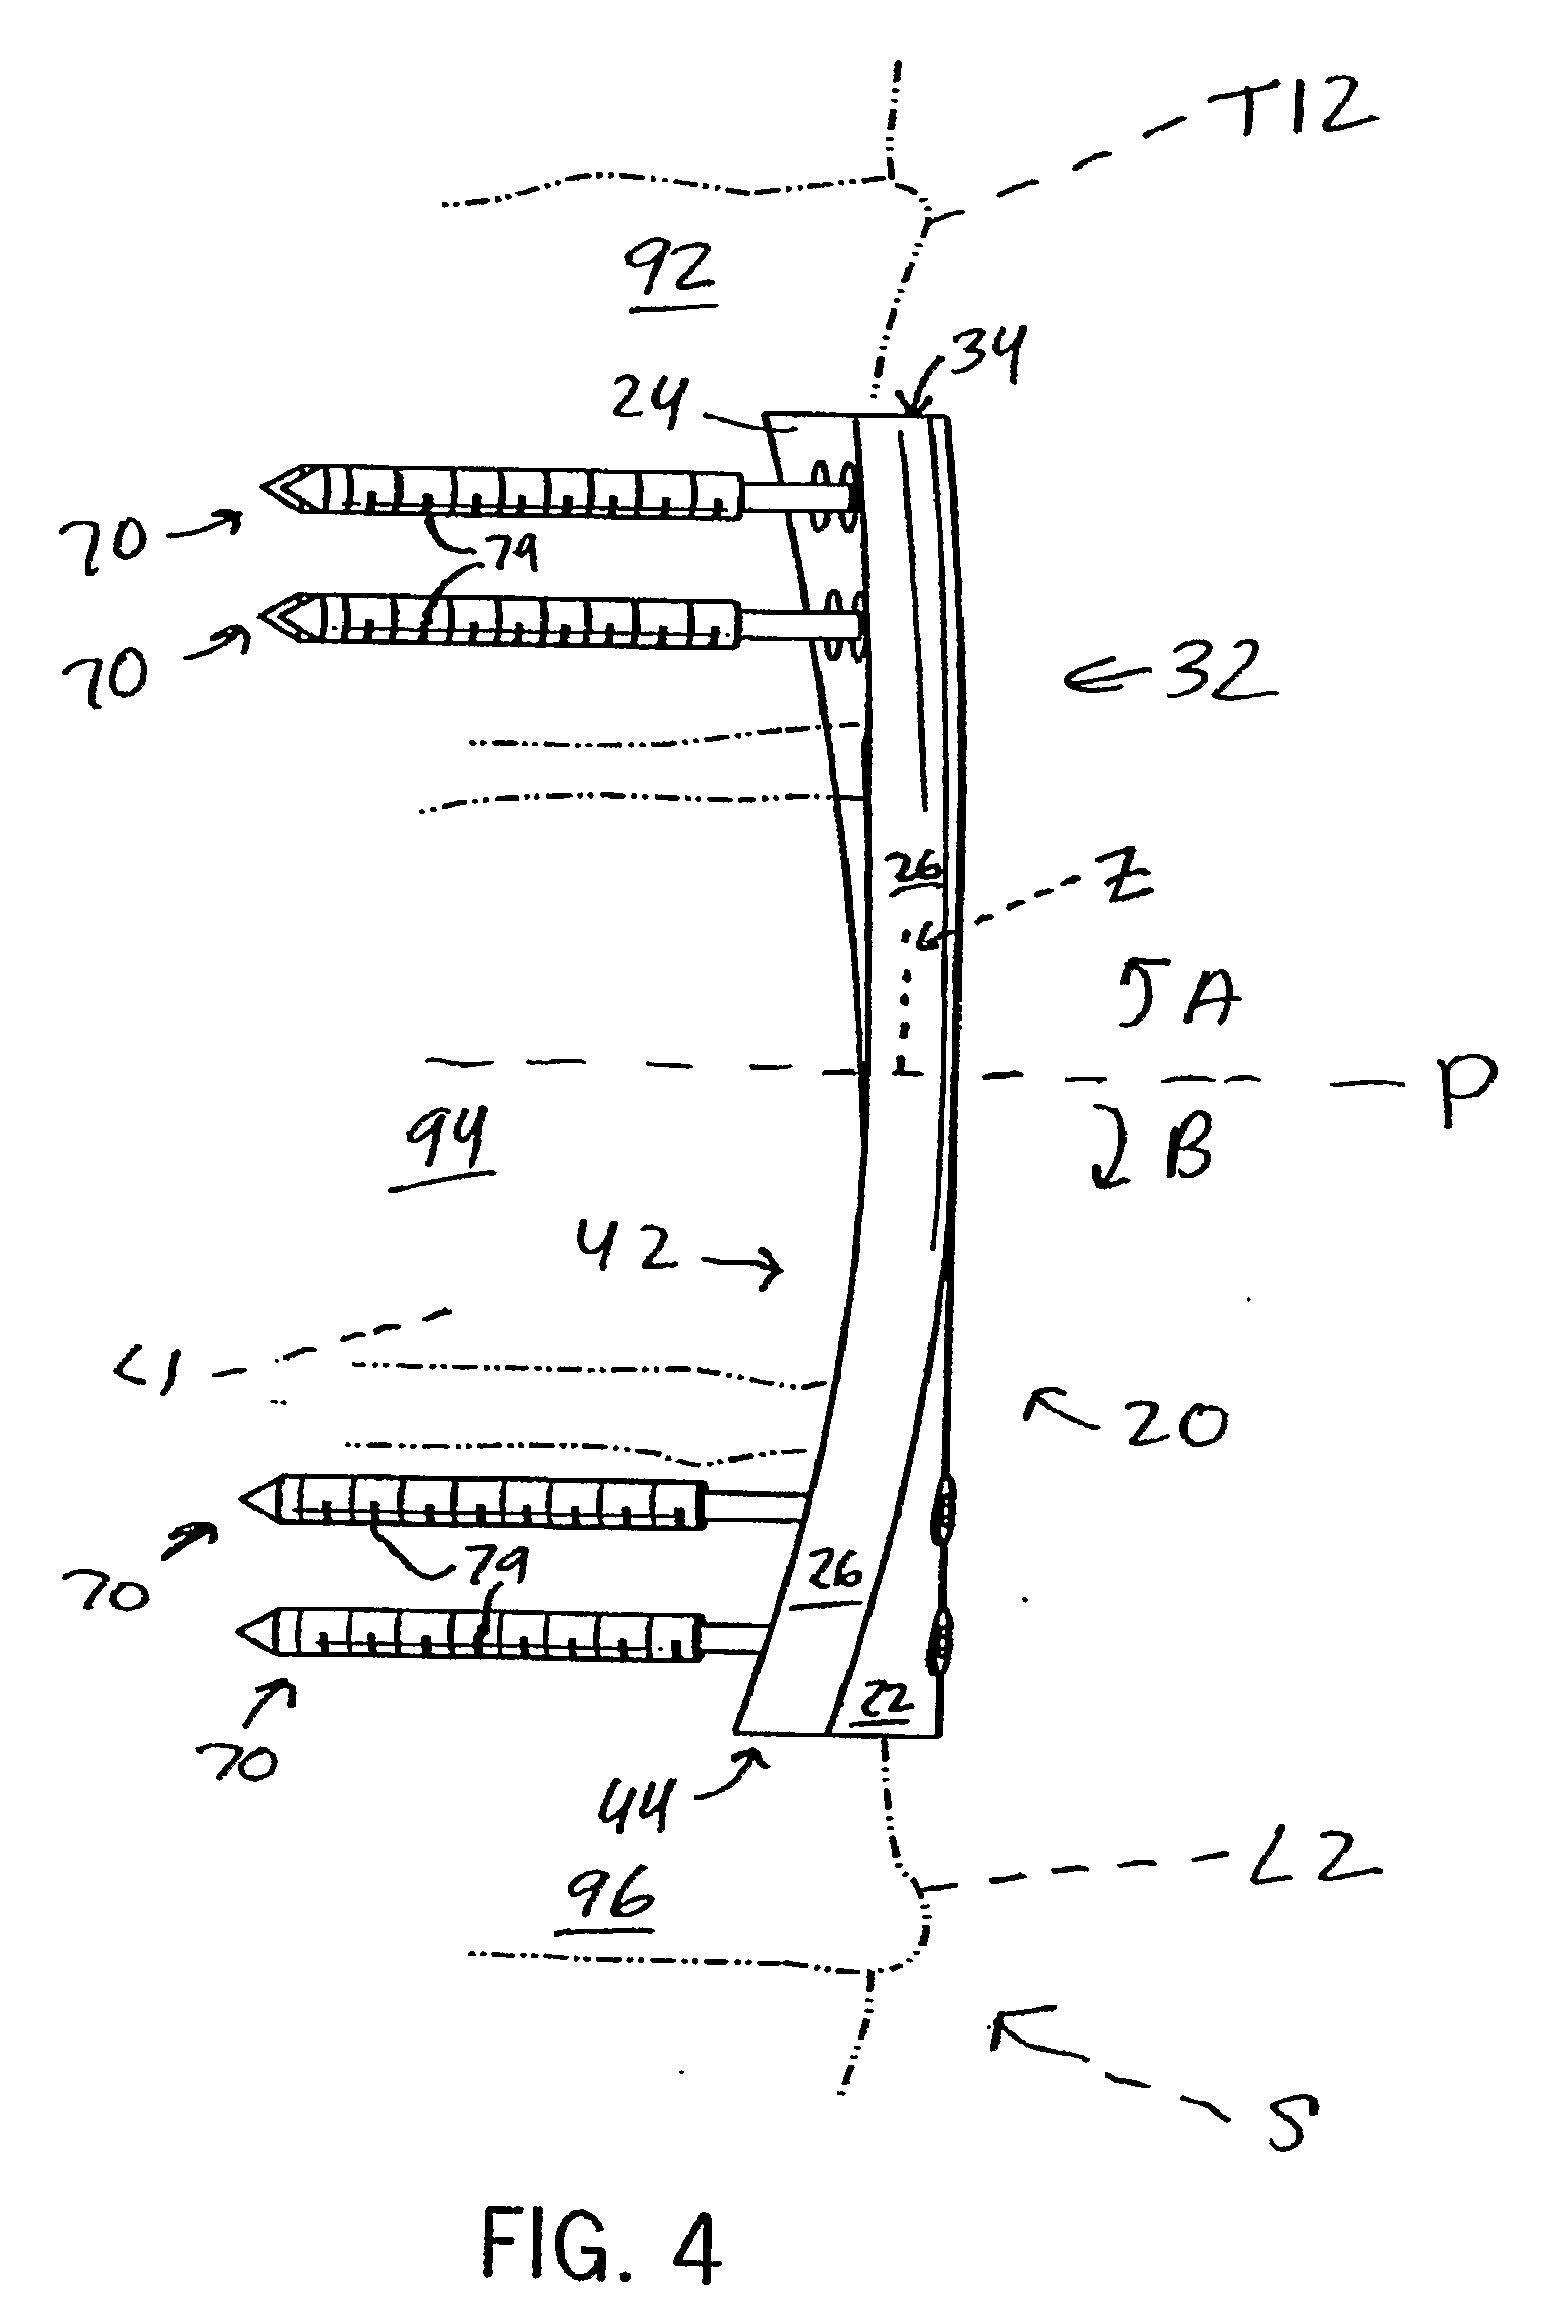 Anterior Adherent Thoracolumbar Spine Plate